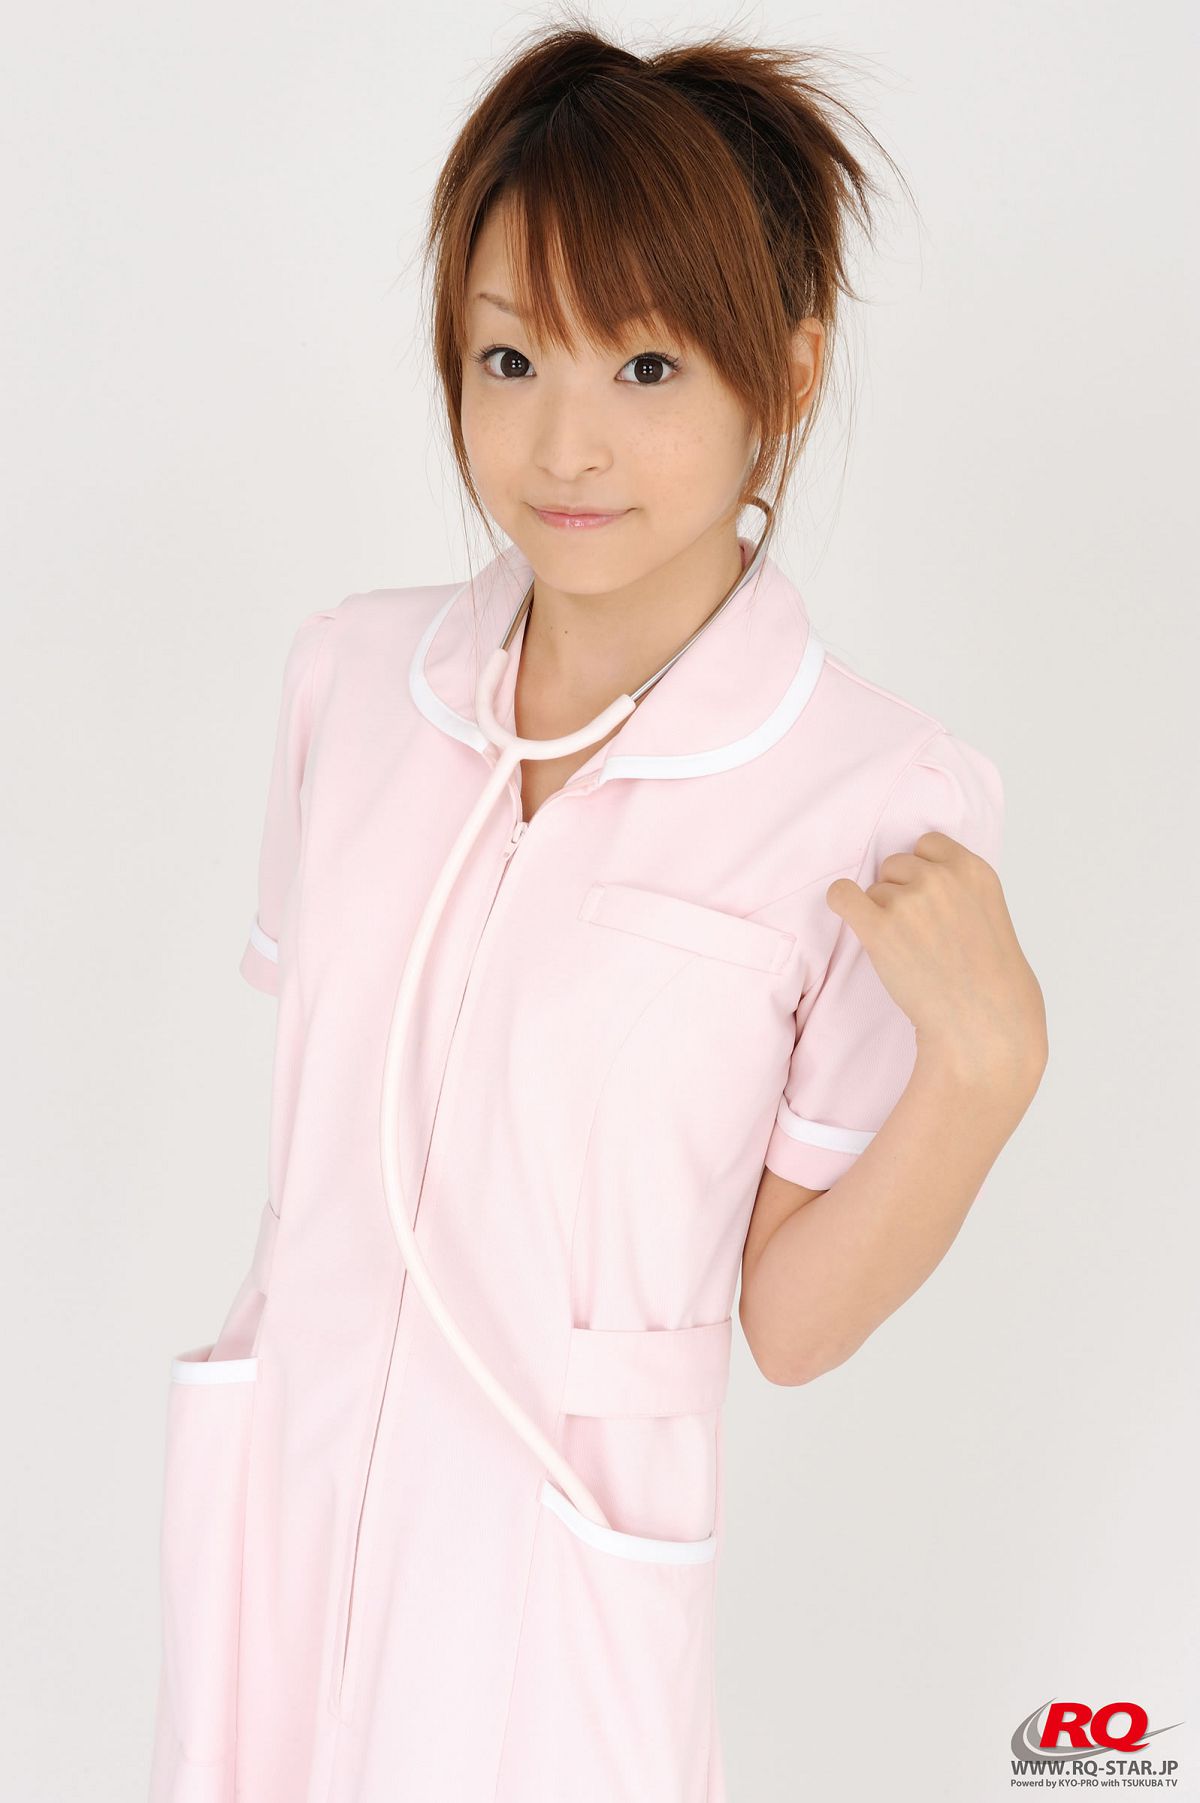 [RQ-STAR] NO.00083 Mio Aoki 青木未央 Nurse Costume [67P]